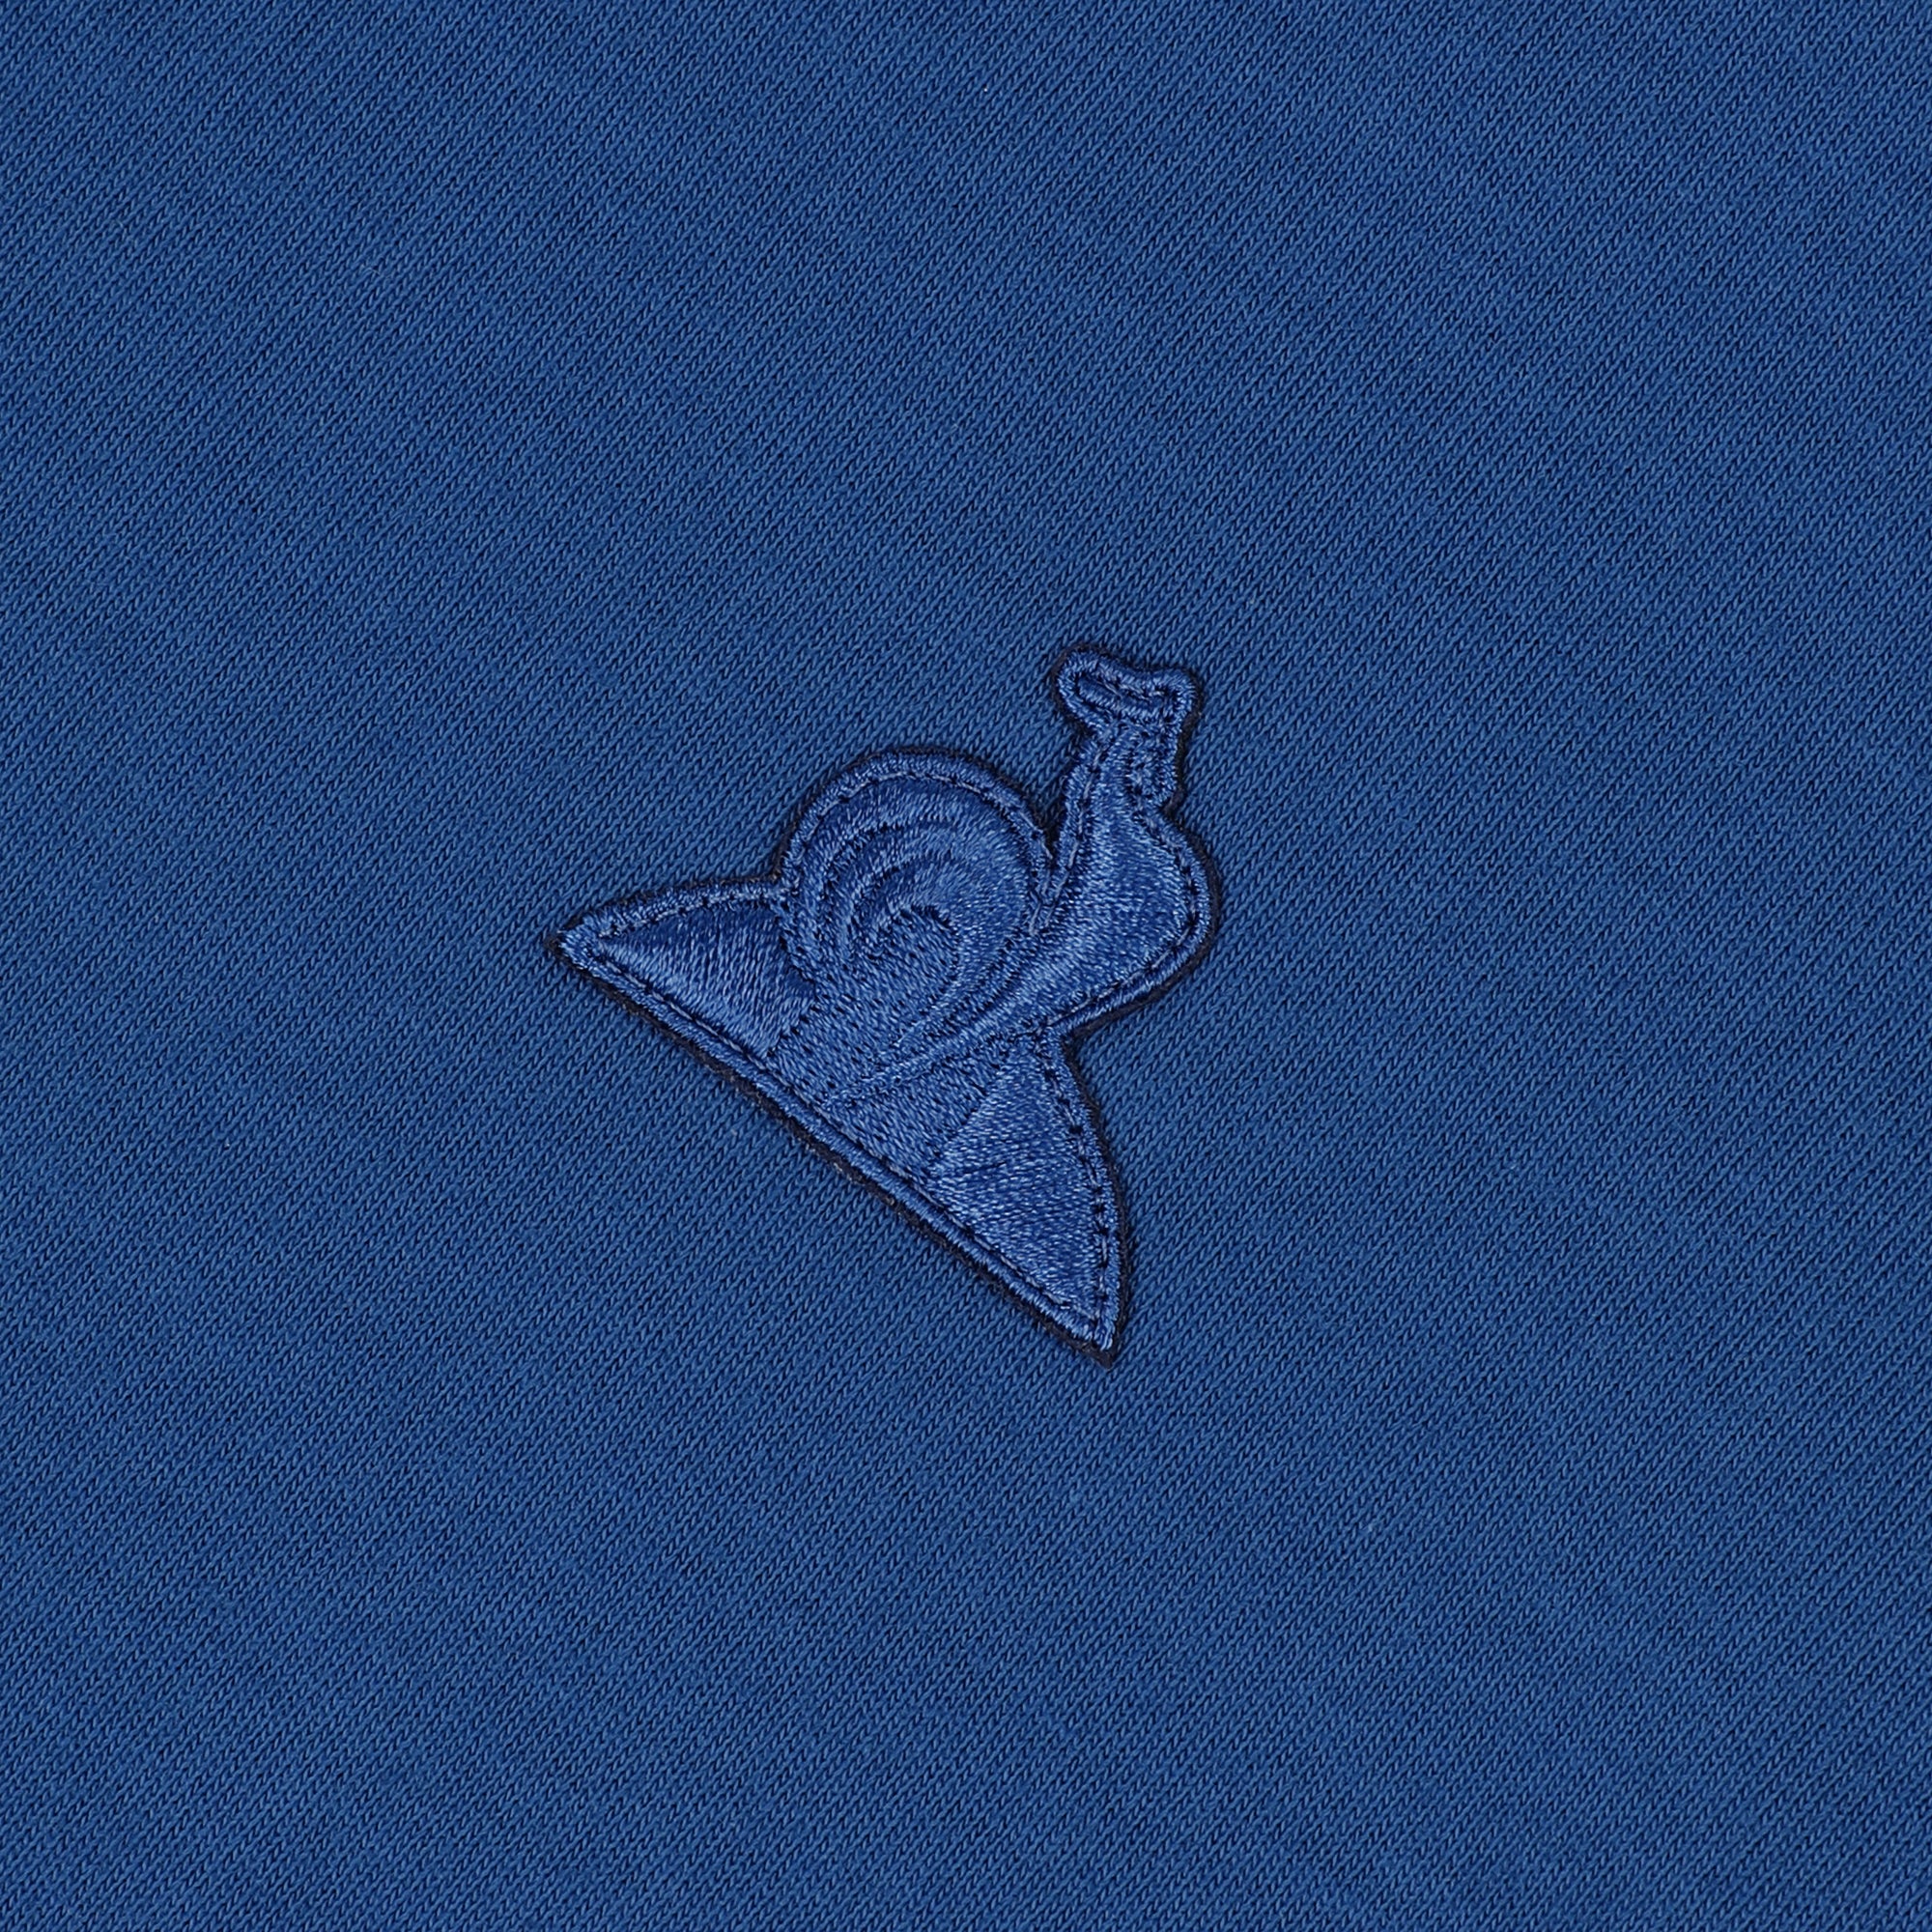 2410405-ESS T/T Tee SS N°1 M bleu perf  | Camiseta Hombre